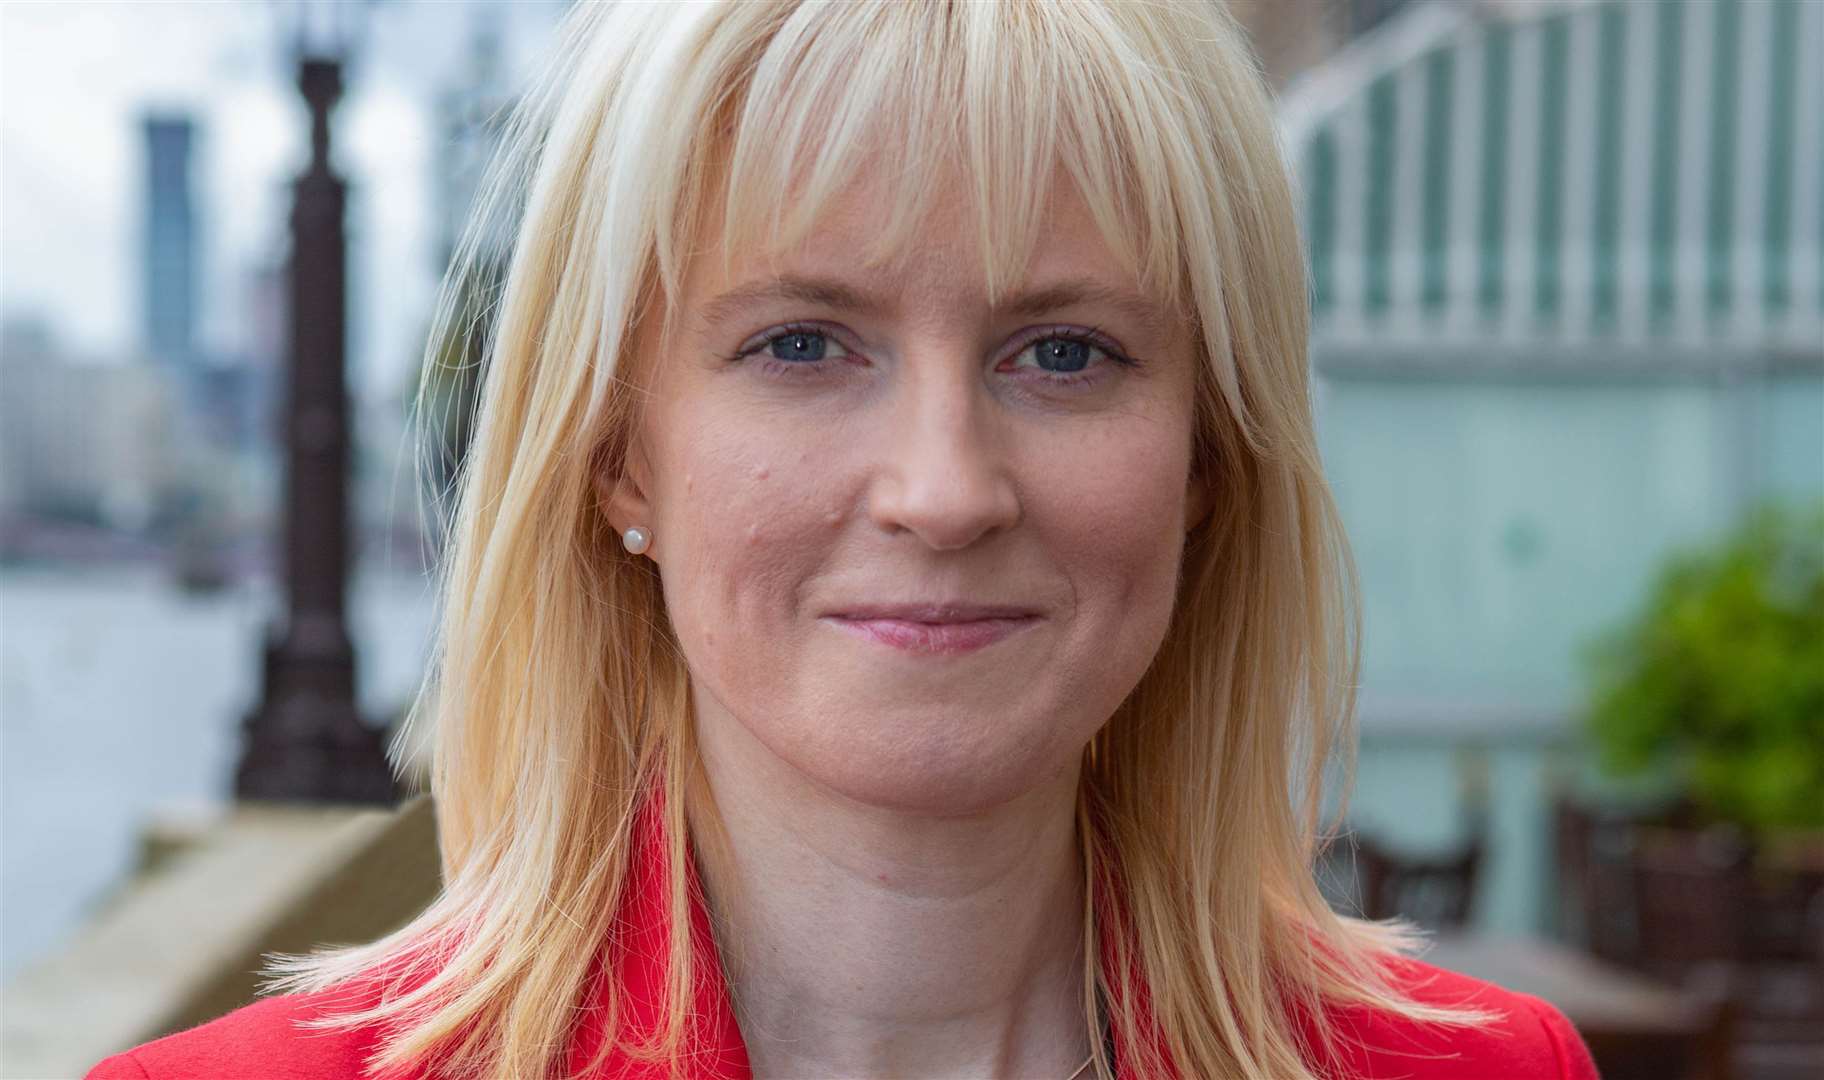 Canterbury's Labour MP Rosie Duffield